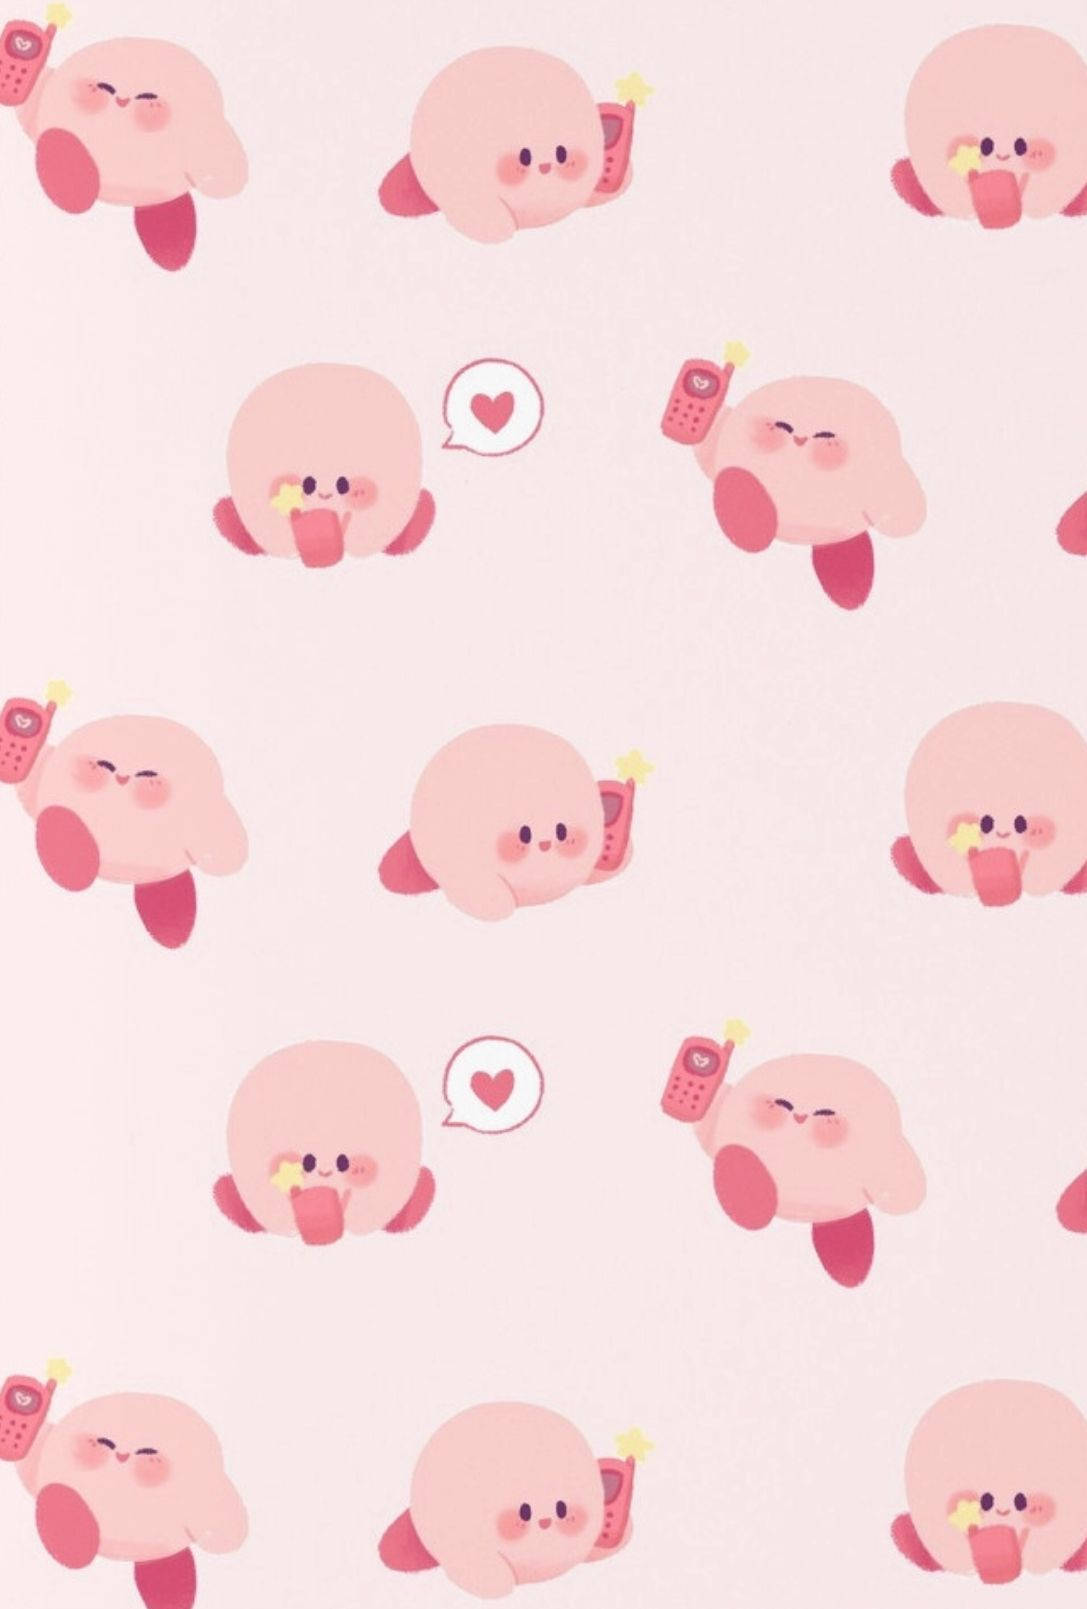 100+] Pink Aesthetic Tumblr Laptop Wallpapers